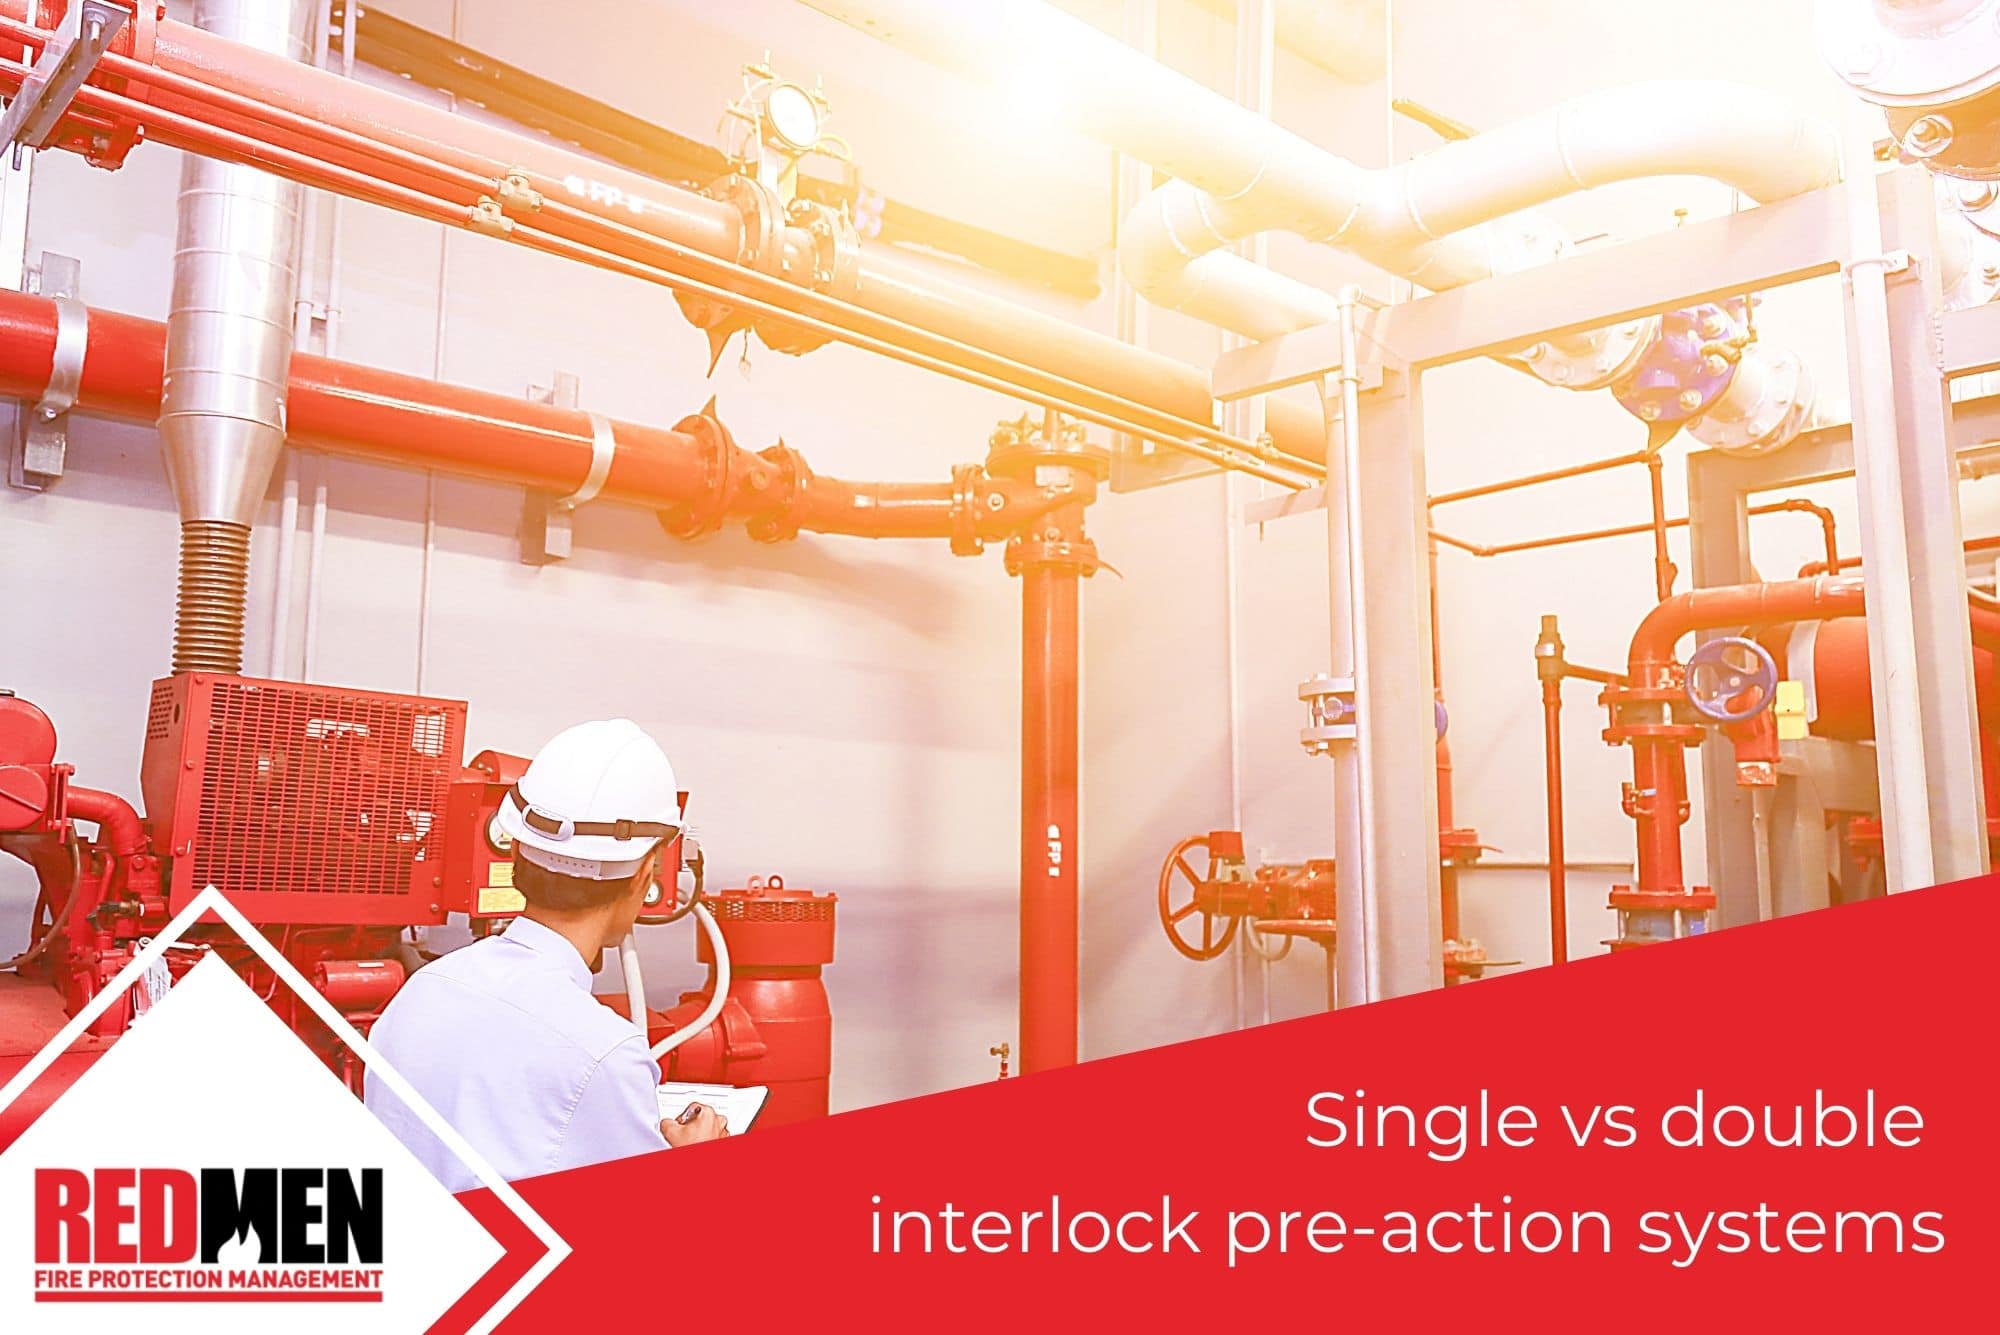 Single vs double interlock pre-action systems